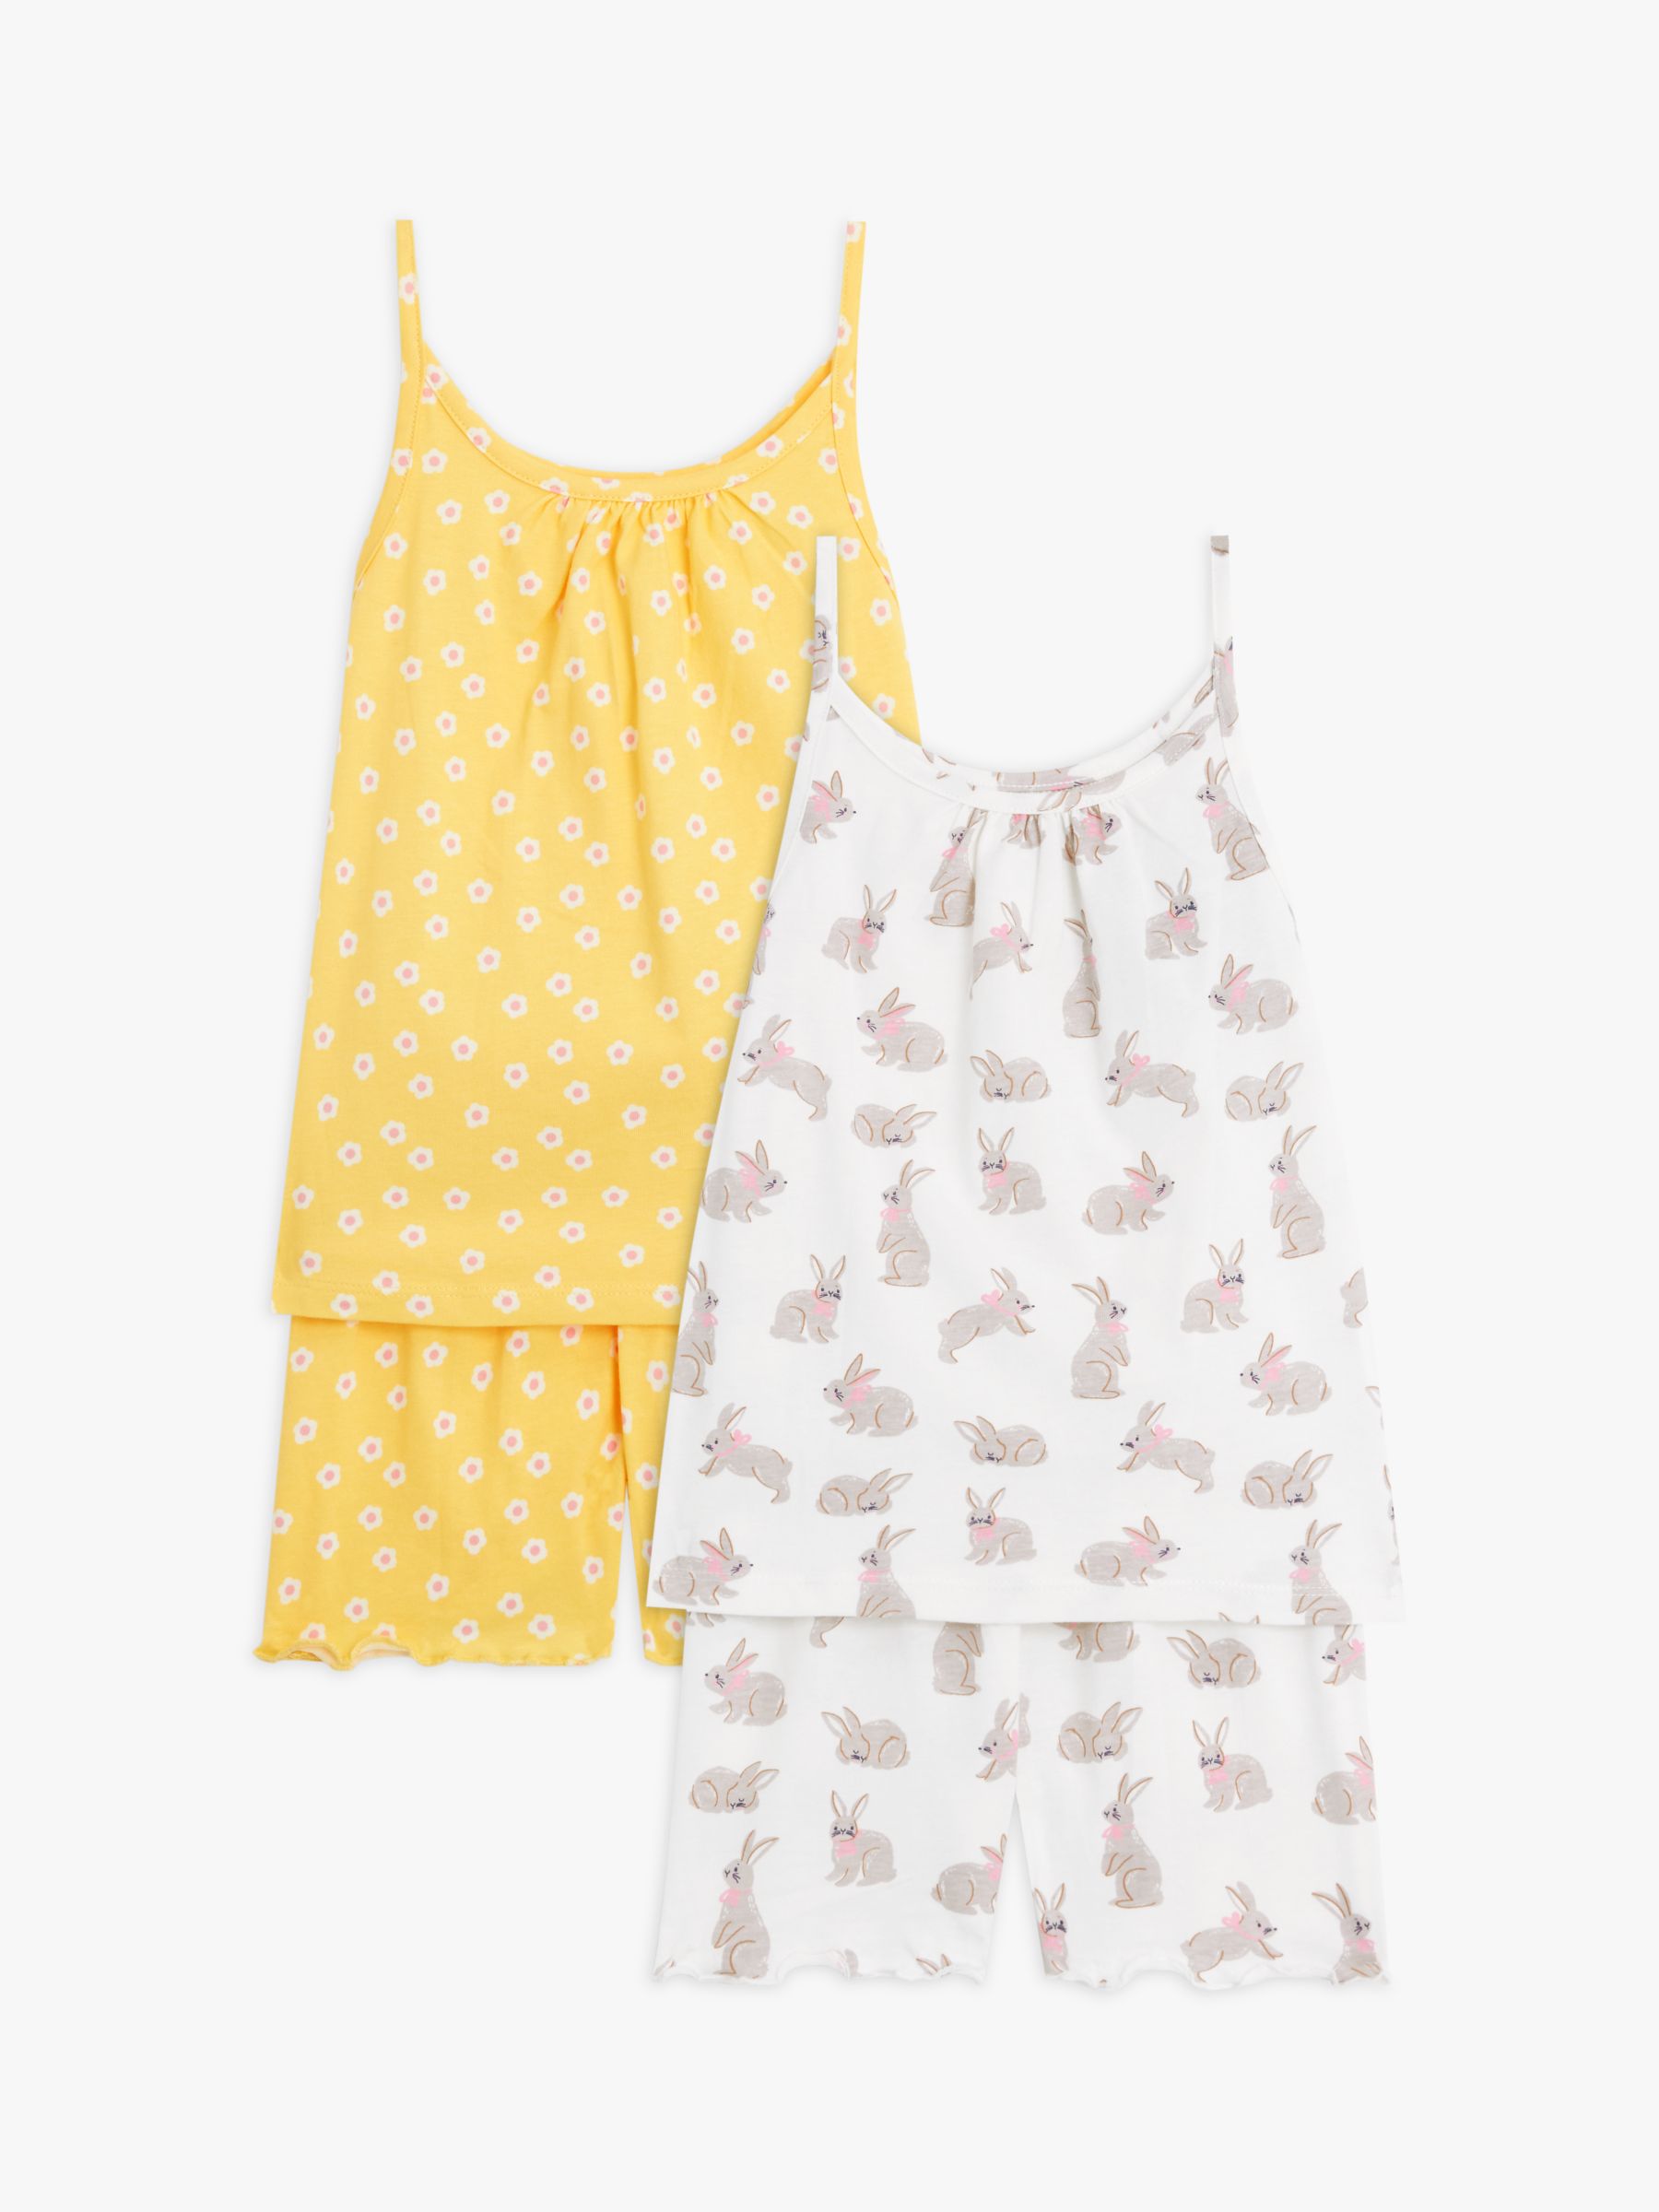 John Lewis Kids' Sleeveless Floral & Bunny Pyjamas, Set of 2, Multi